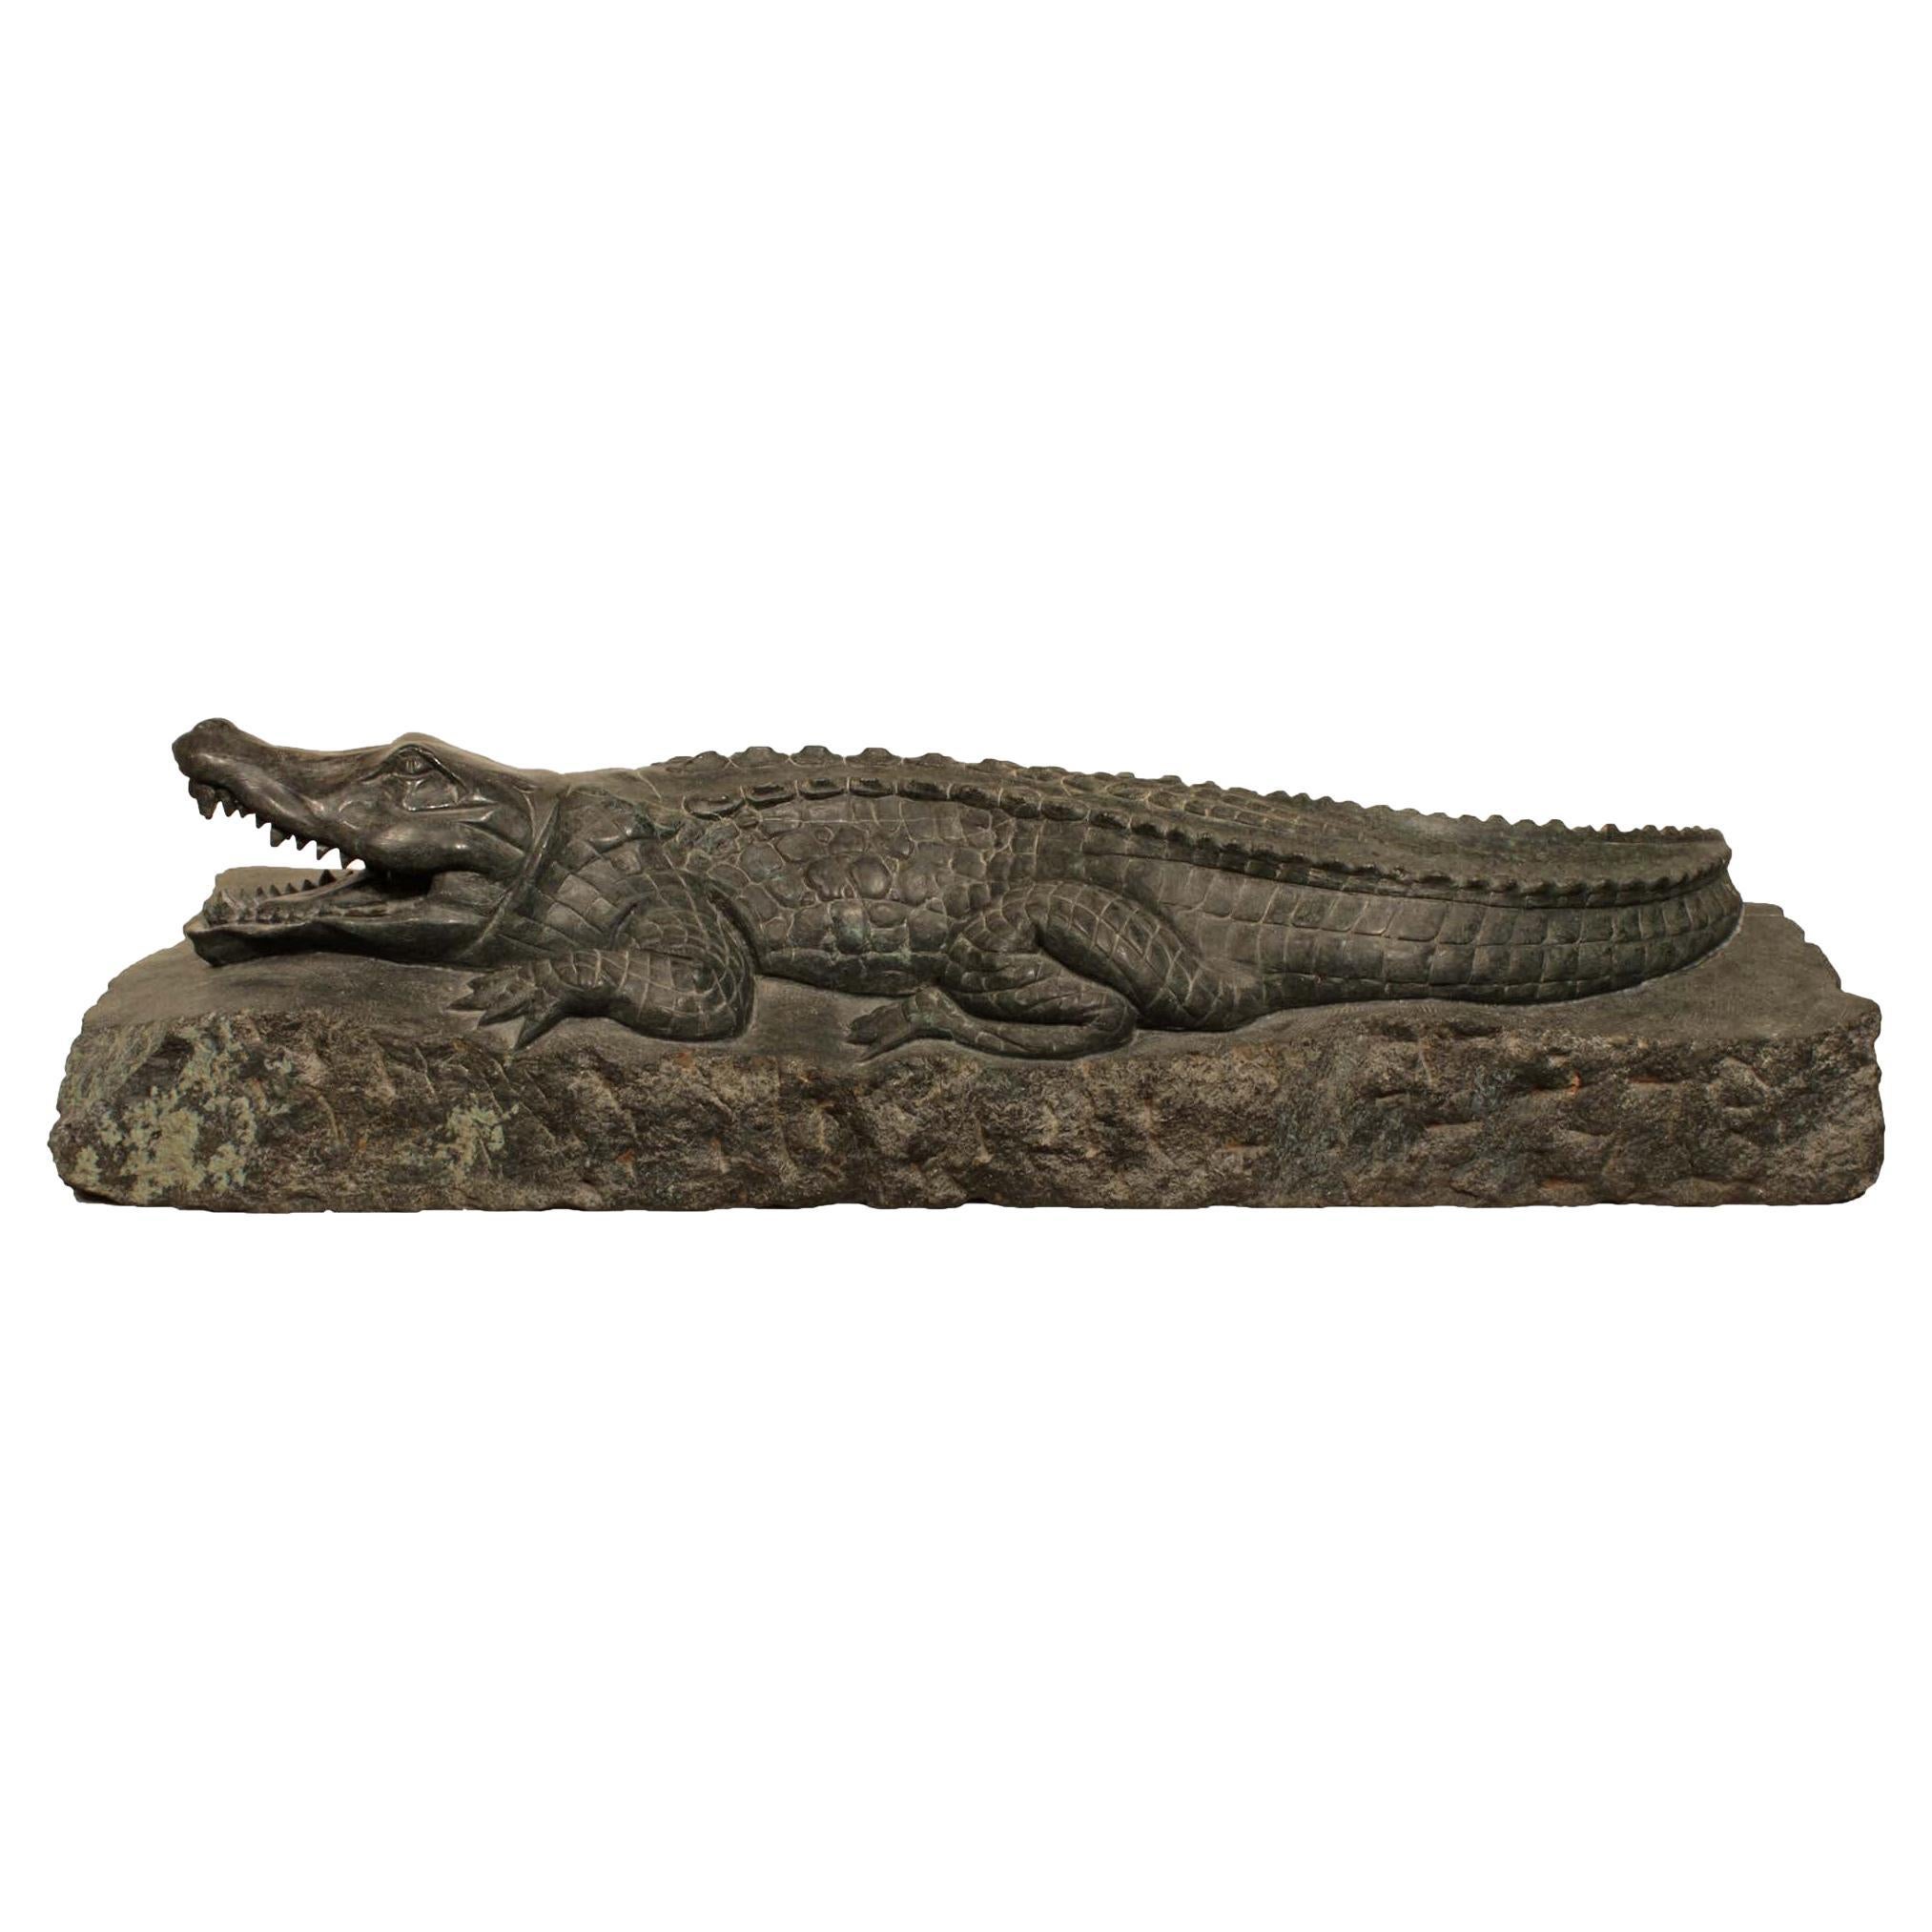 Italian 19th Century Verde Prato Marble Alligator Sculpture, from Florence